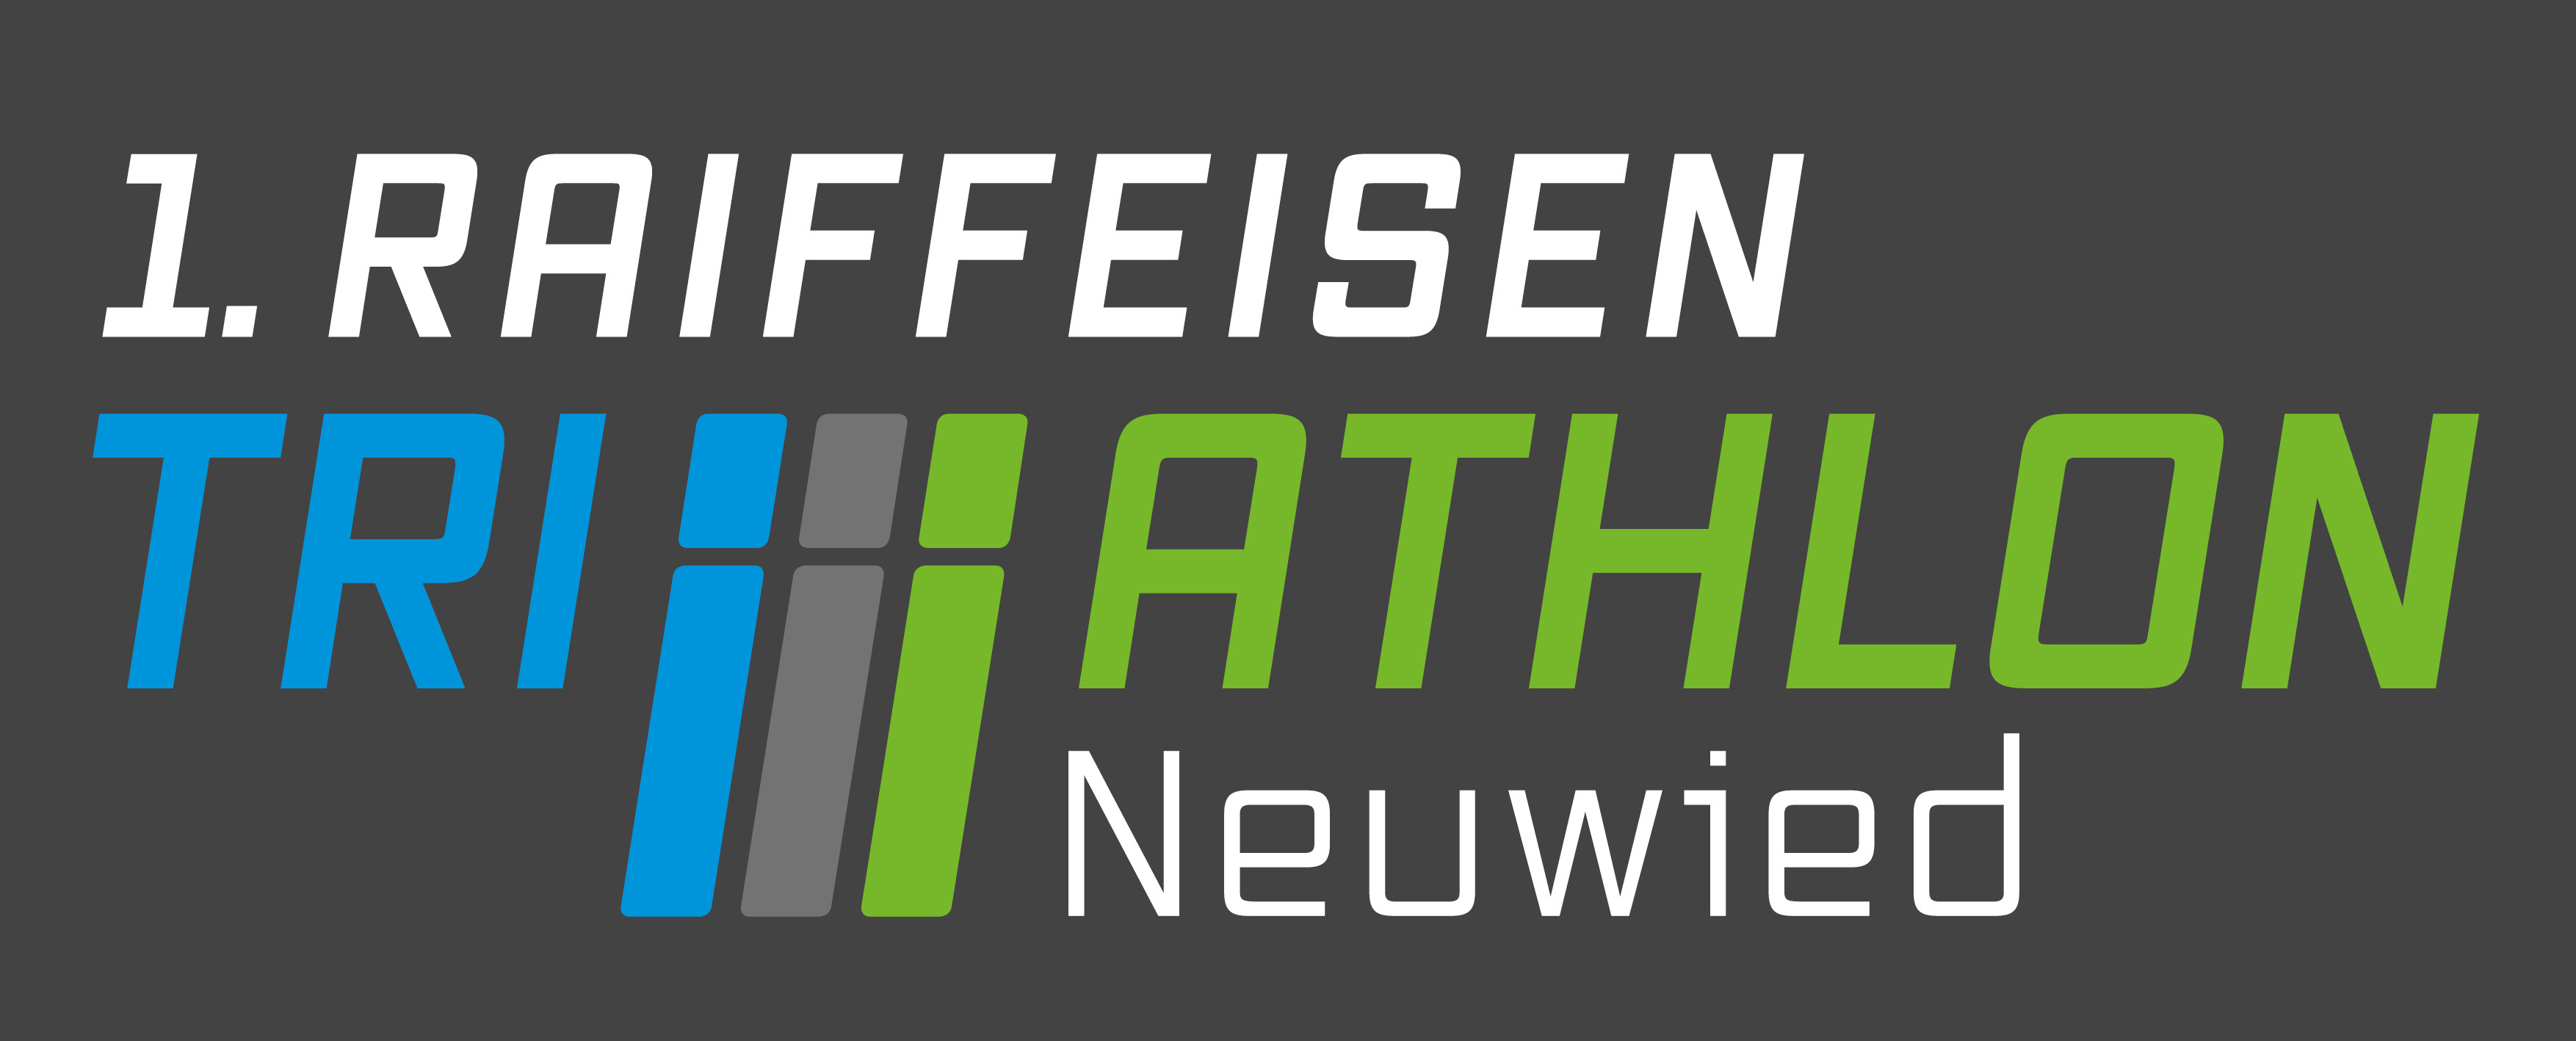 Raiffeisentriathlon Neuwied 2017